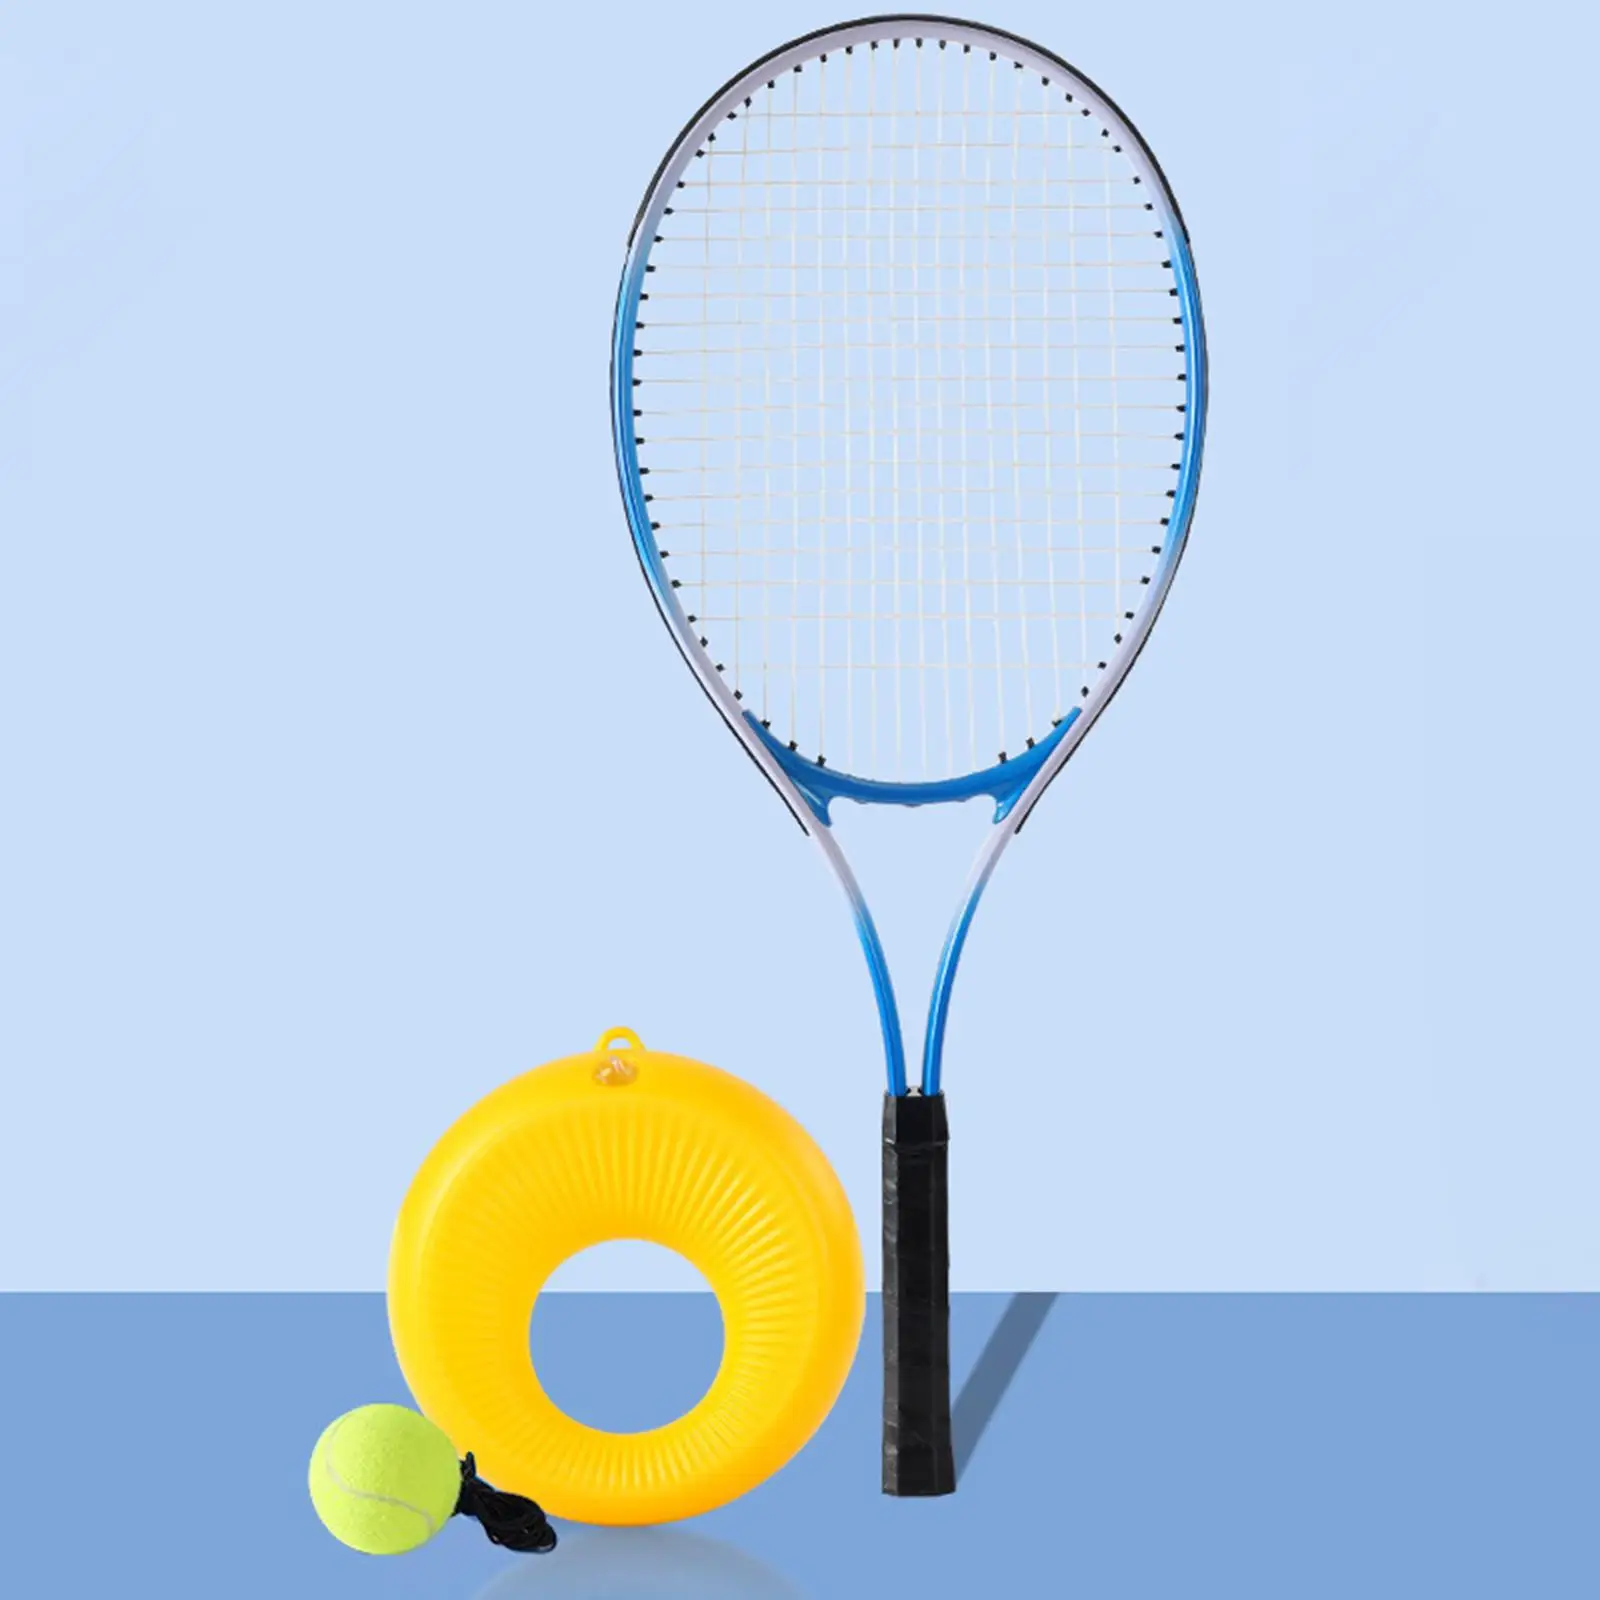 Self Practice Solo Training Tennis Training Tennis Racket Tool, Practical Single